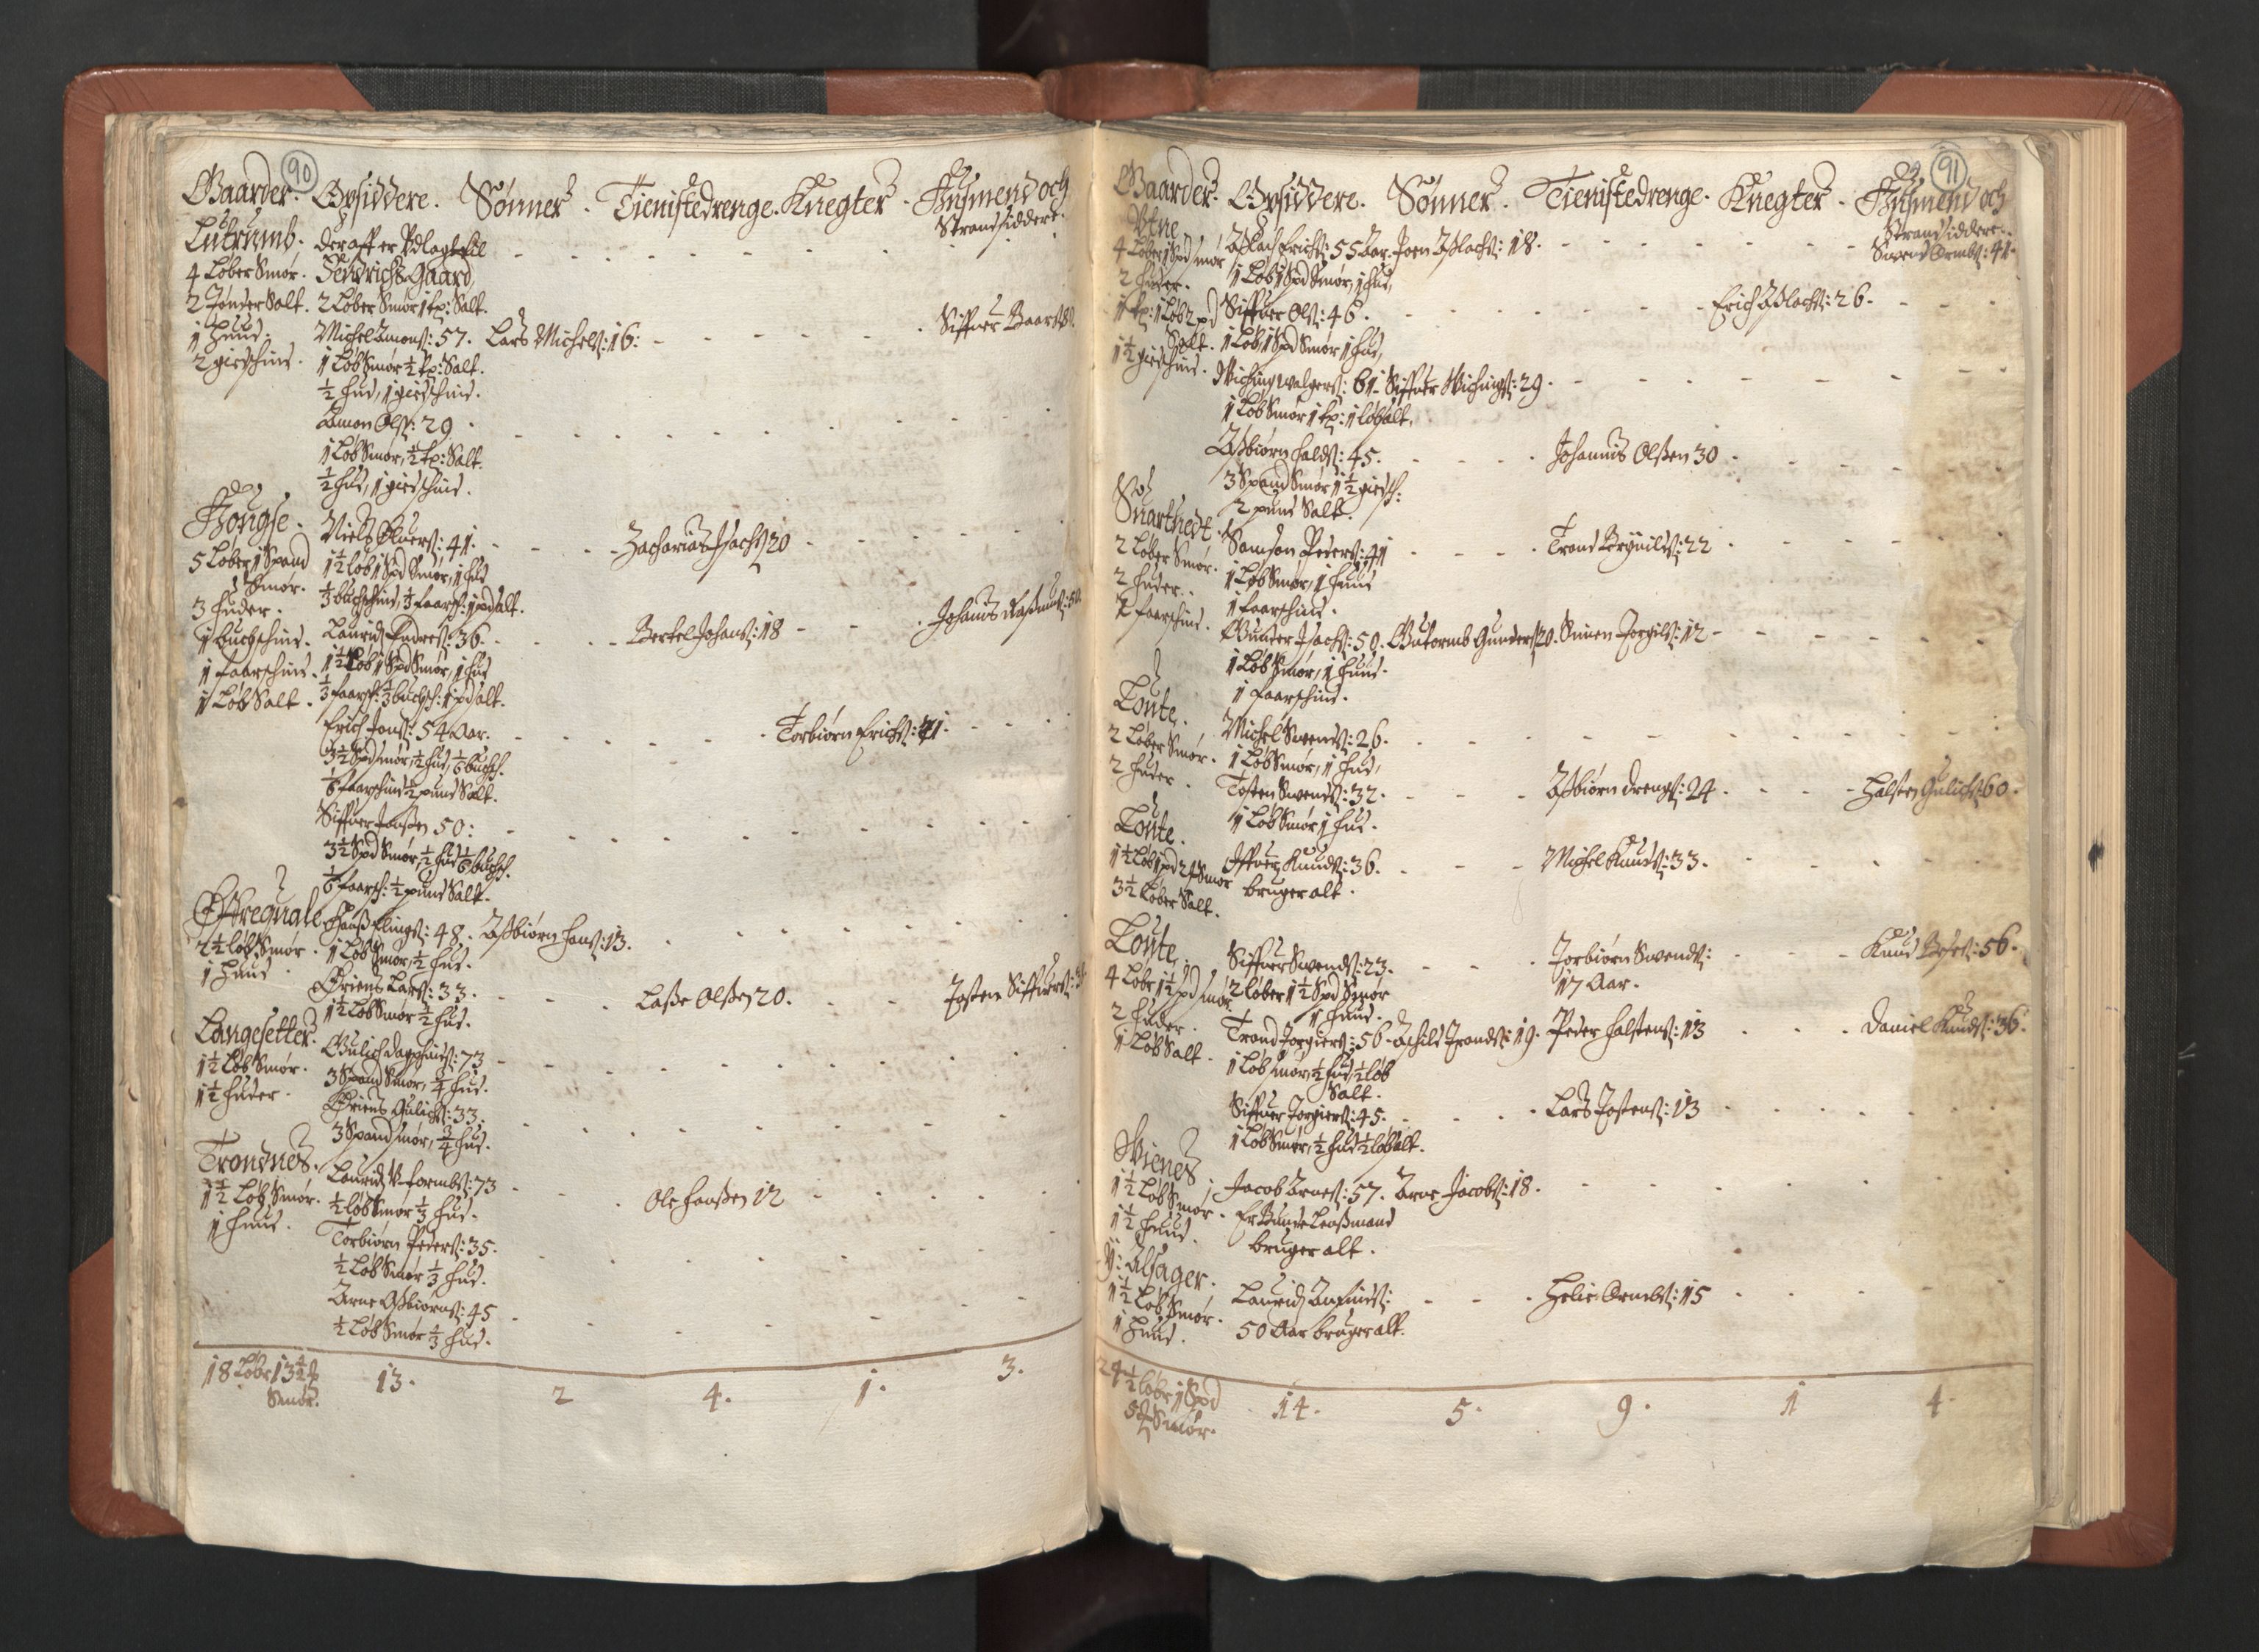 RA, Fogdenes og sorenskrivernes manntall 1664-1666, nr. 14: Hardanger len, Ytre Sogn fogderi og Indre Sogn fogderi, 1664-1665, s. 90-91